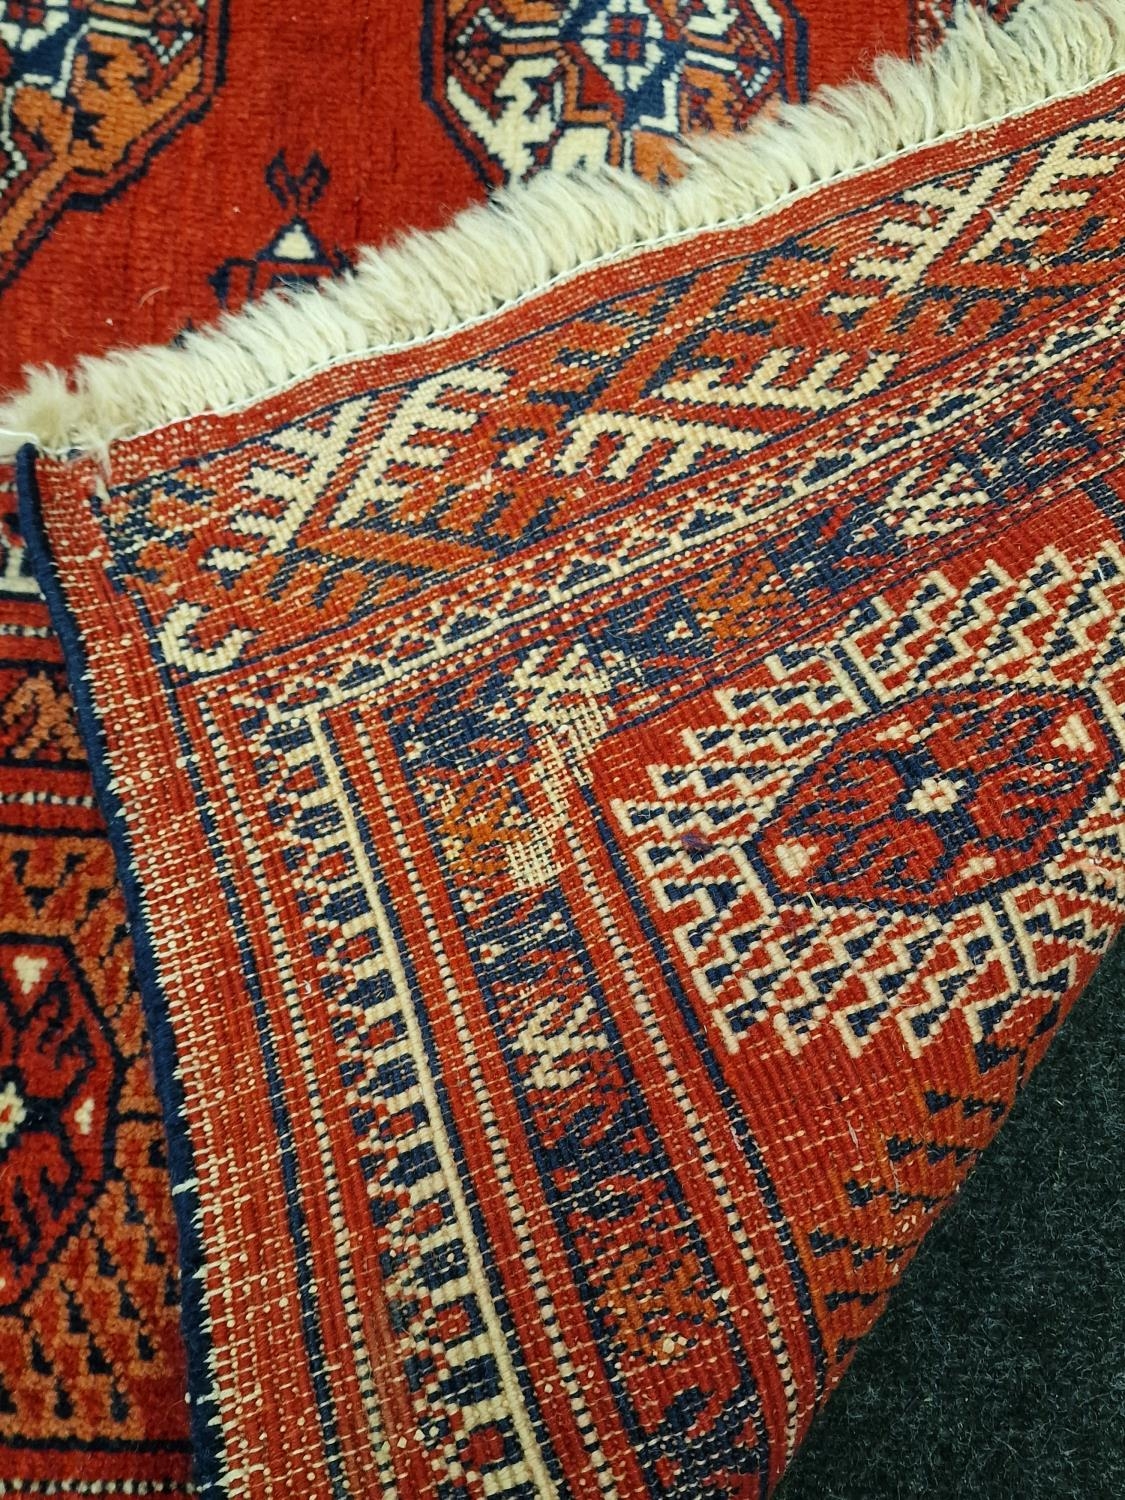 Large room size red patterned carpet 355x270cm. - Image 5 of 5